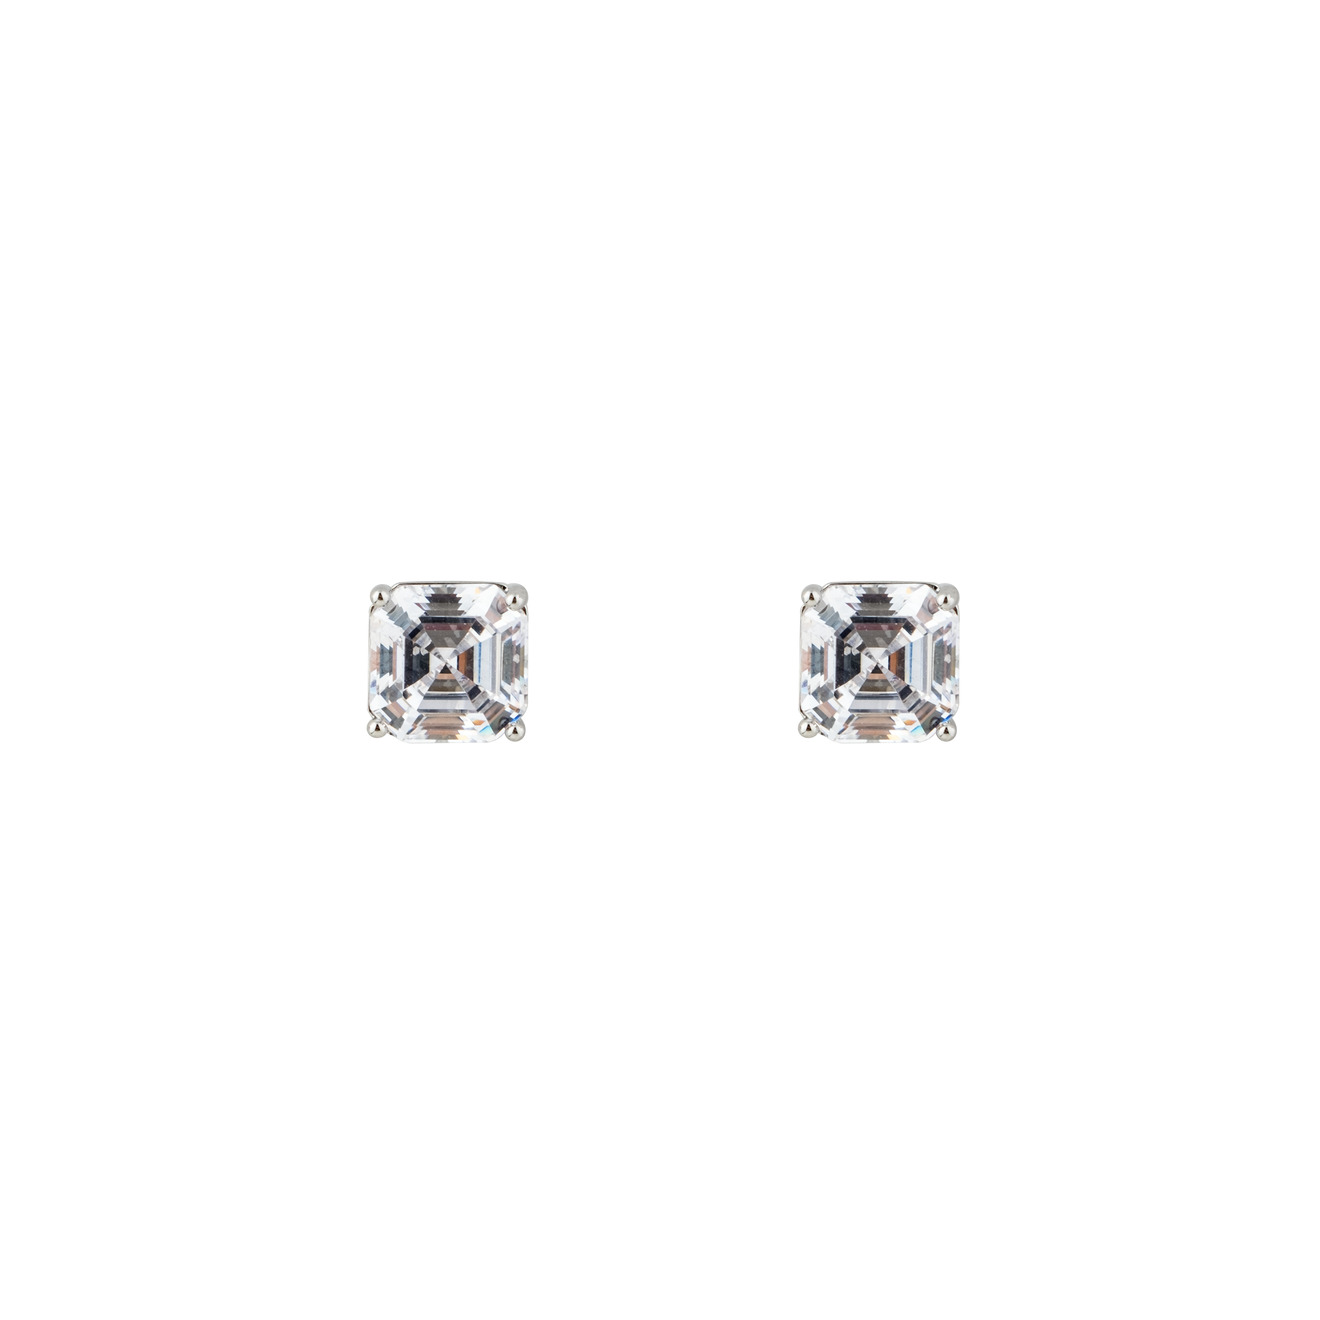 Herald Percy Серебристые серьги с белыми кристаллами herald percy серебристый тонкий браслет с белыми кристаллами